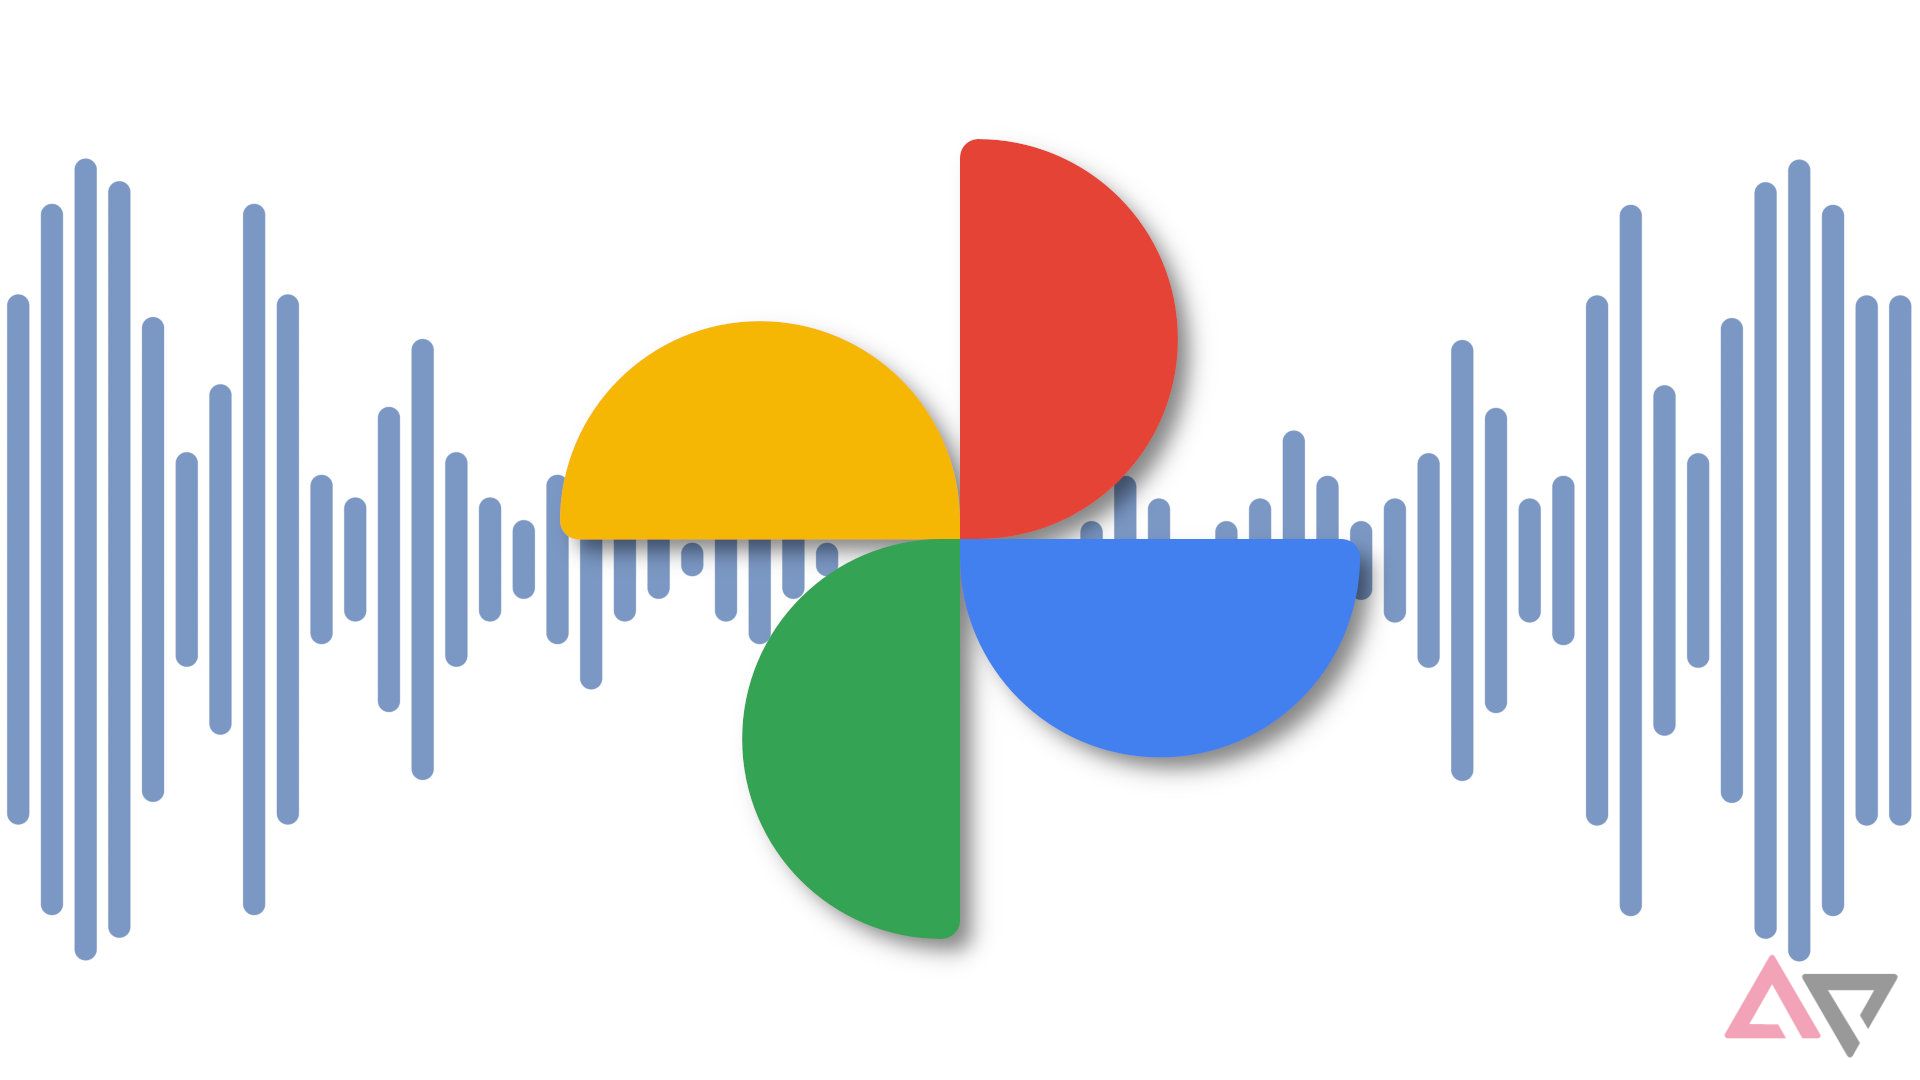 The Google Photos logo appears over a sound waveform